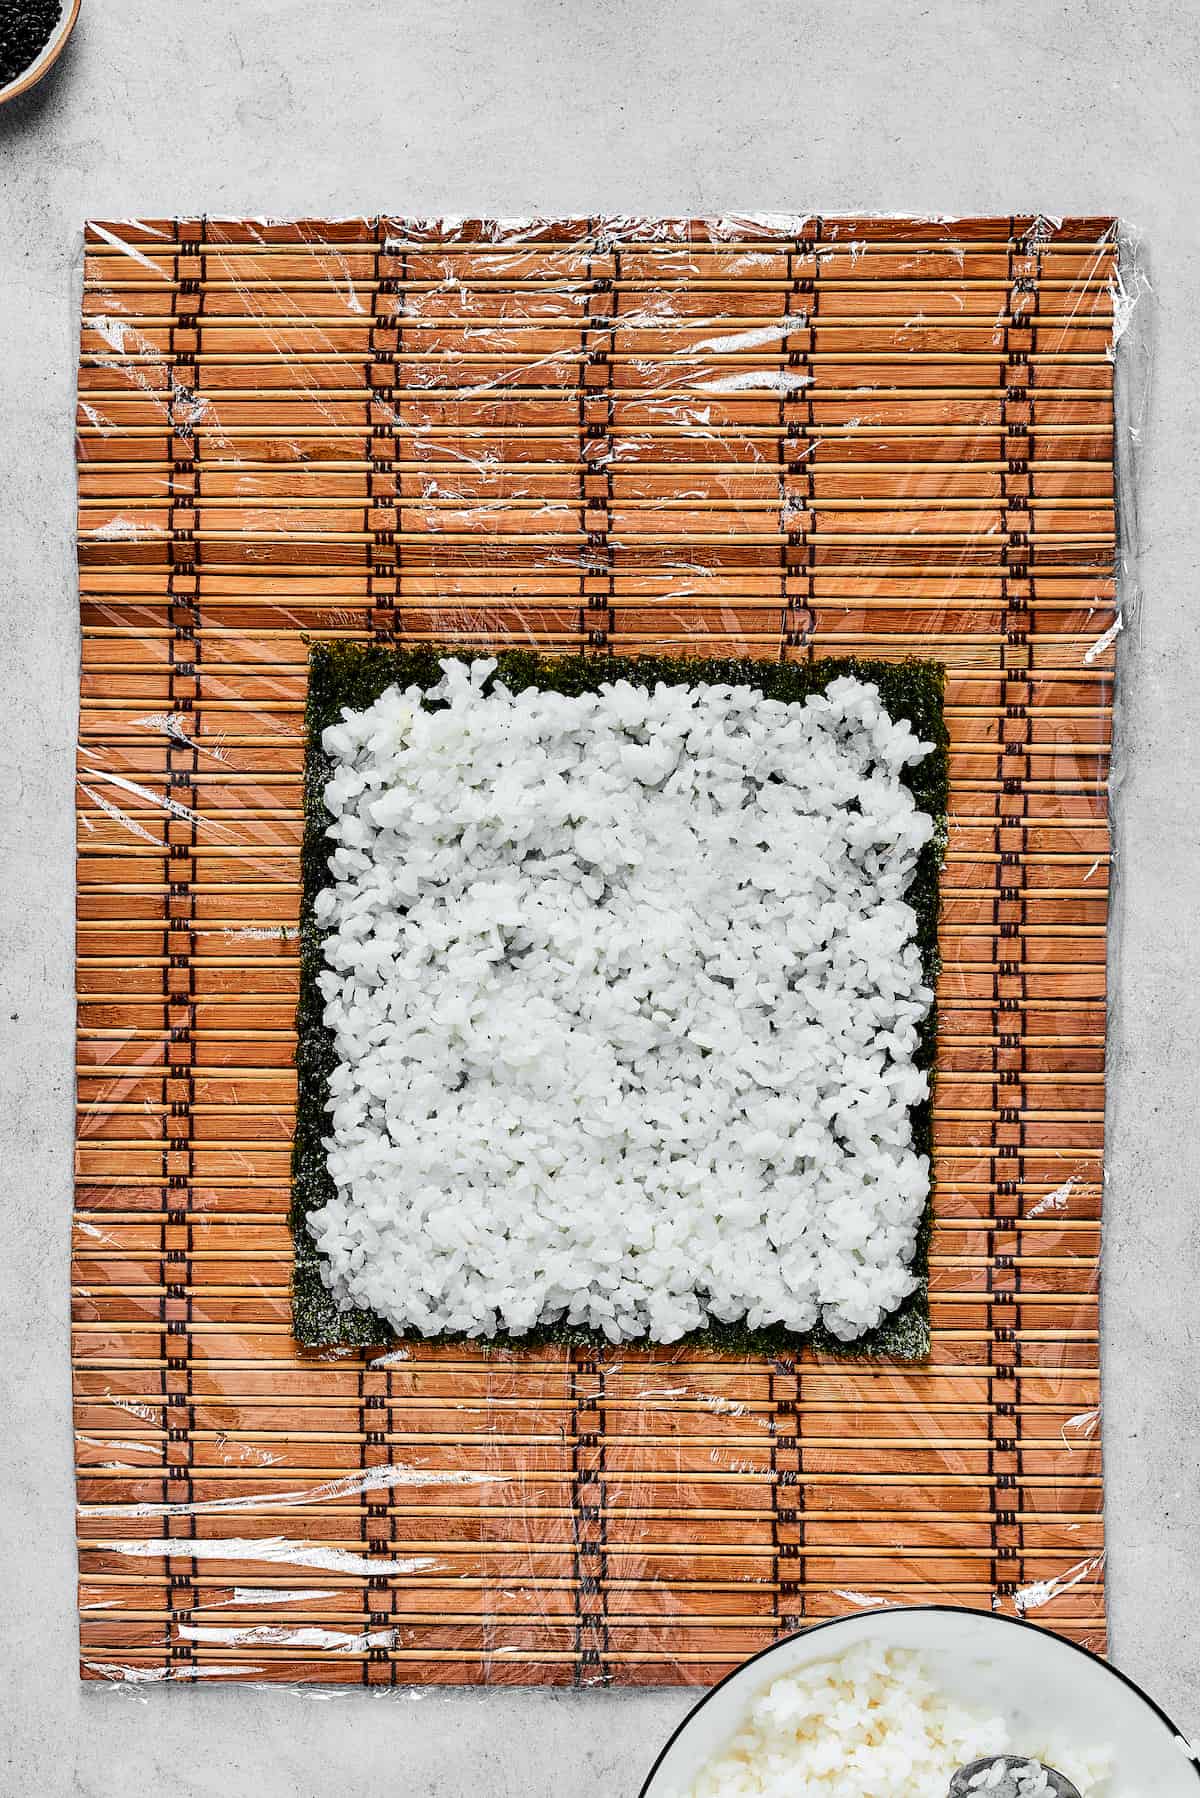 Sushi rice on a sheet of nori